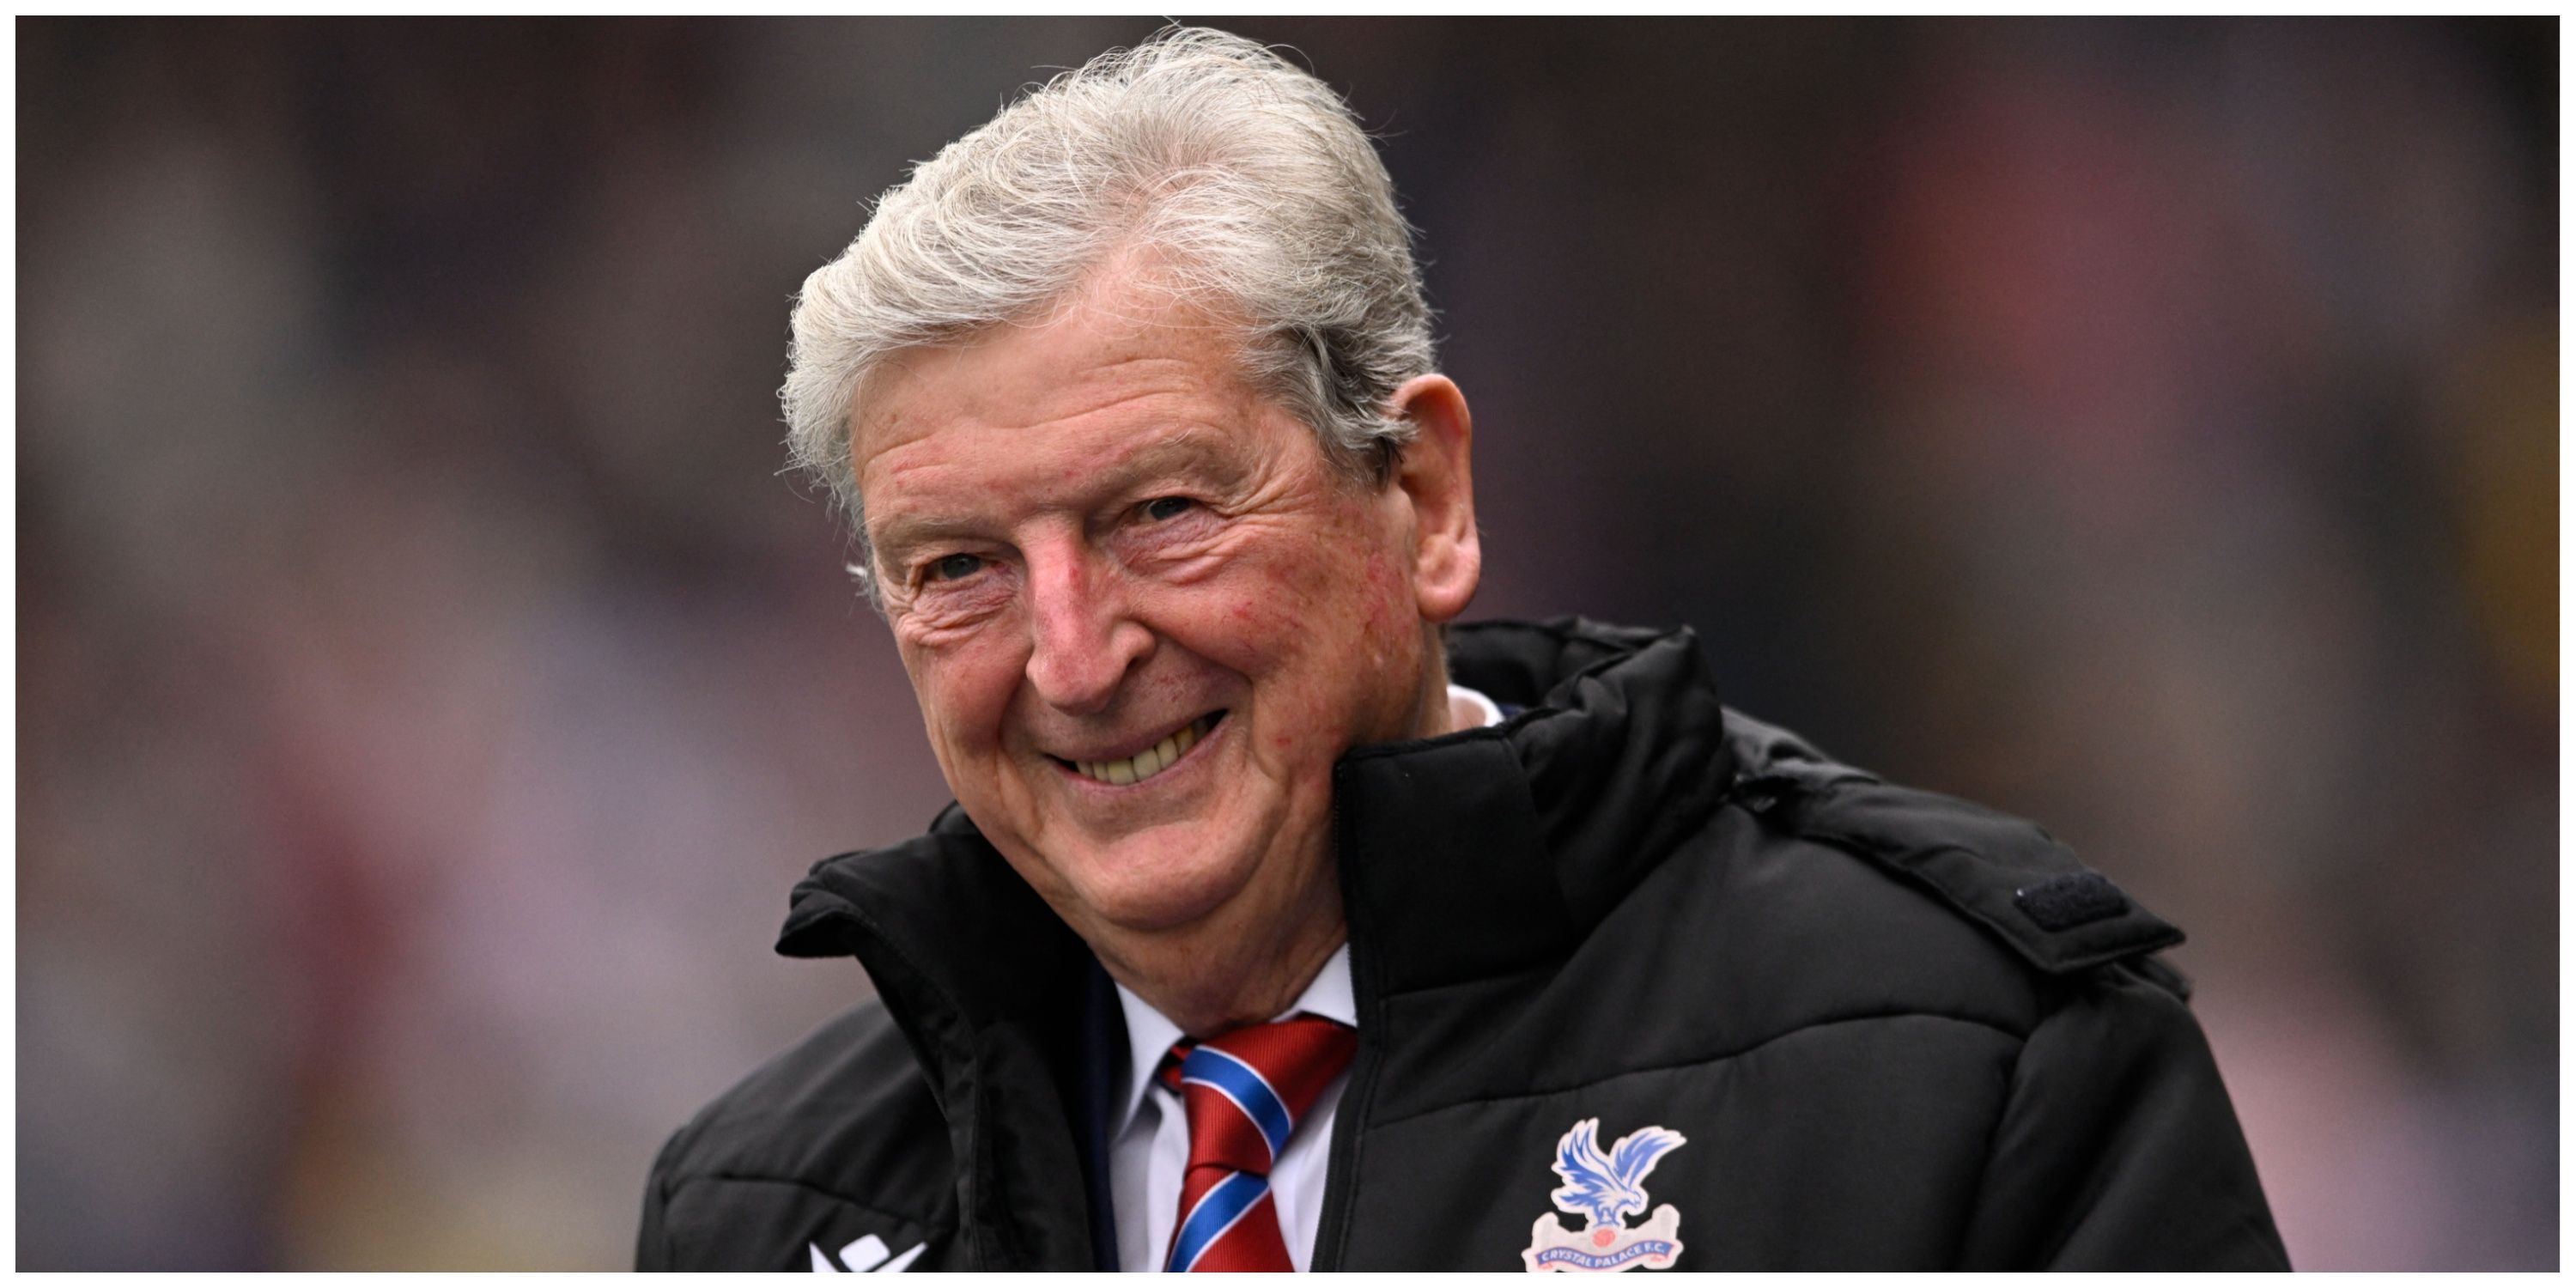 Crystal Palace manager Roy Hodgson smiling